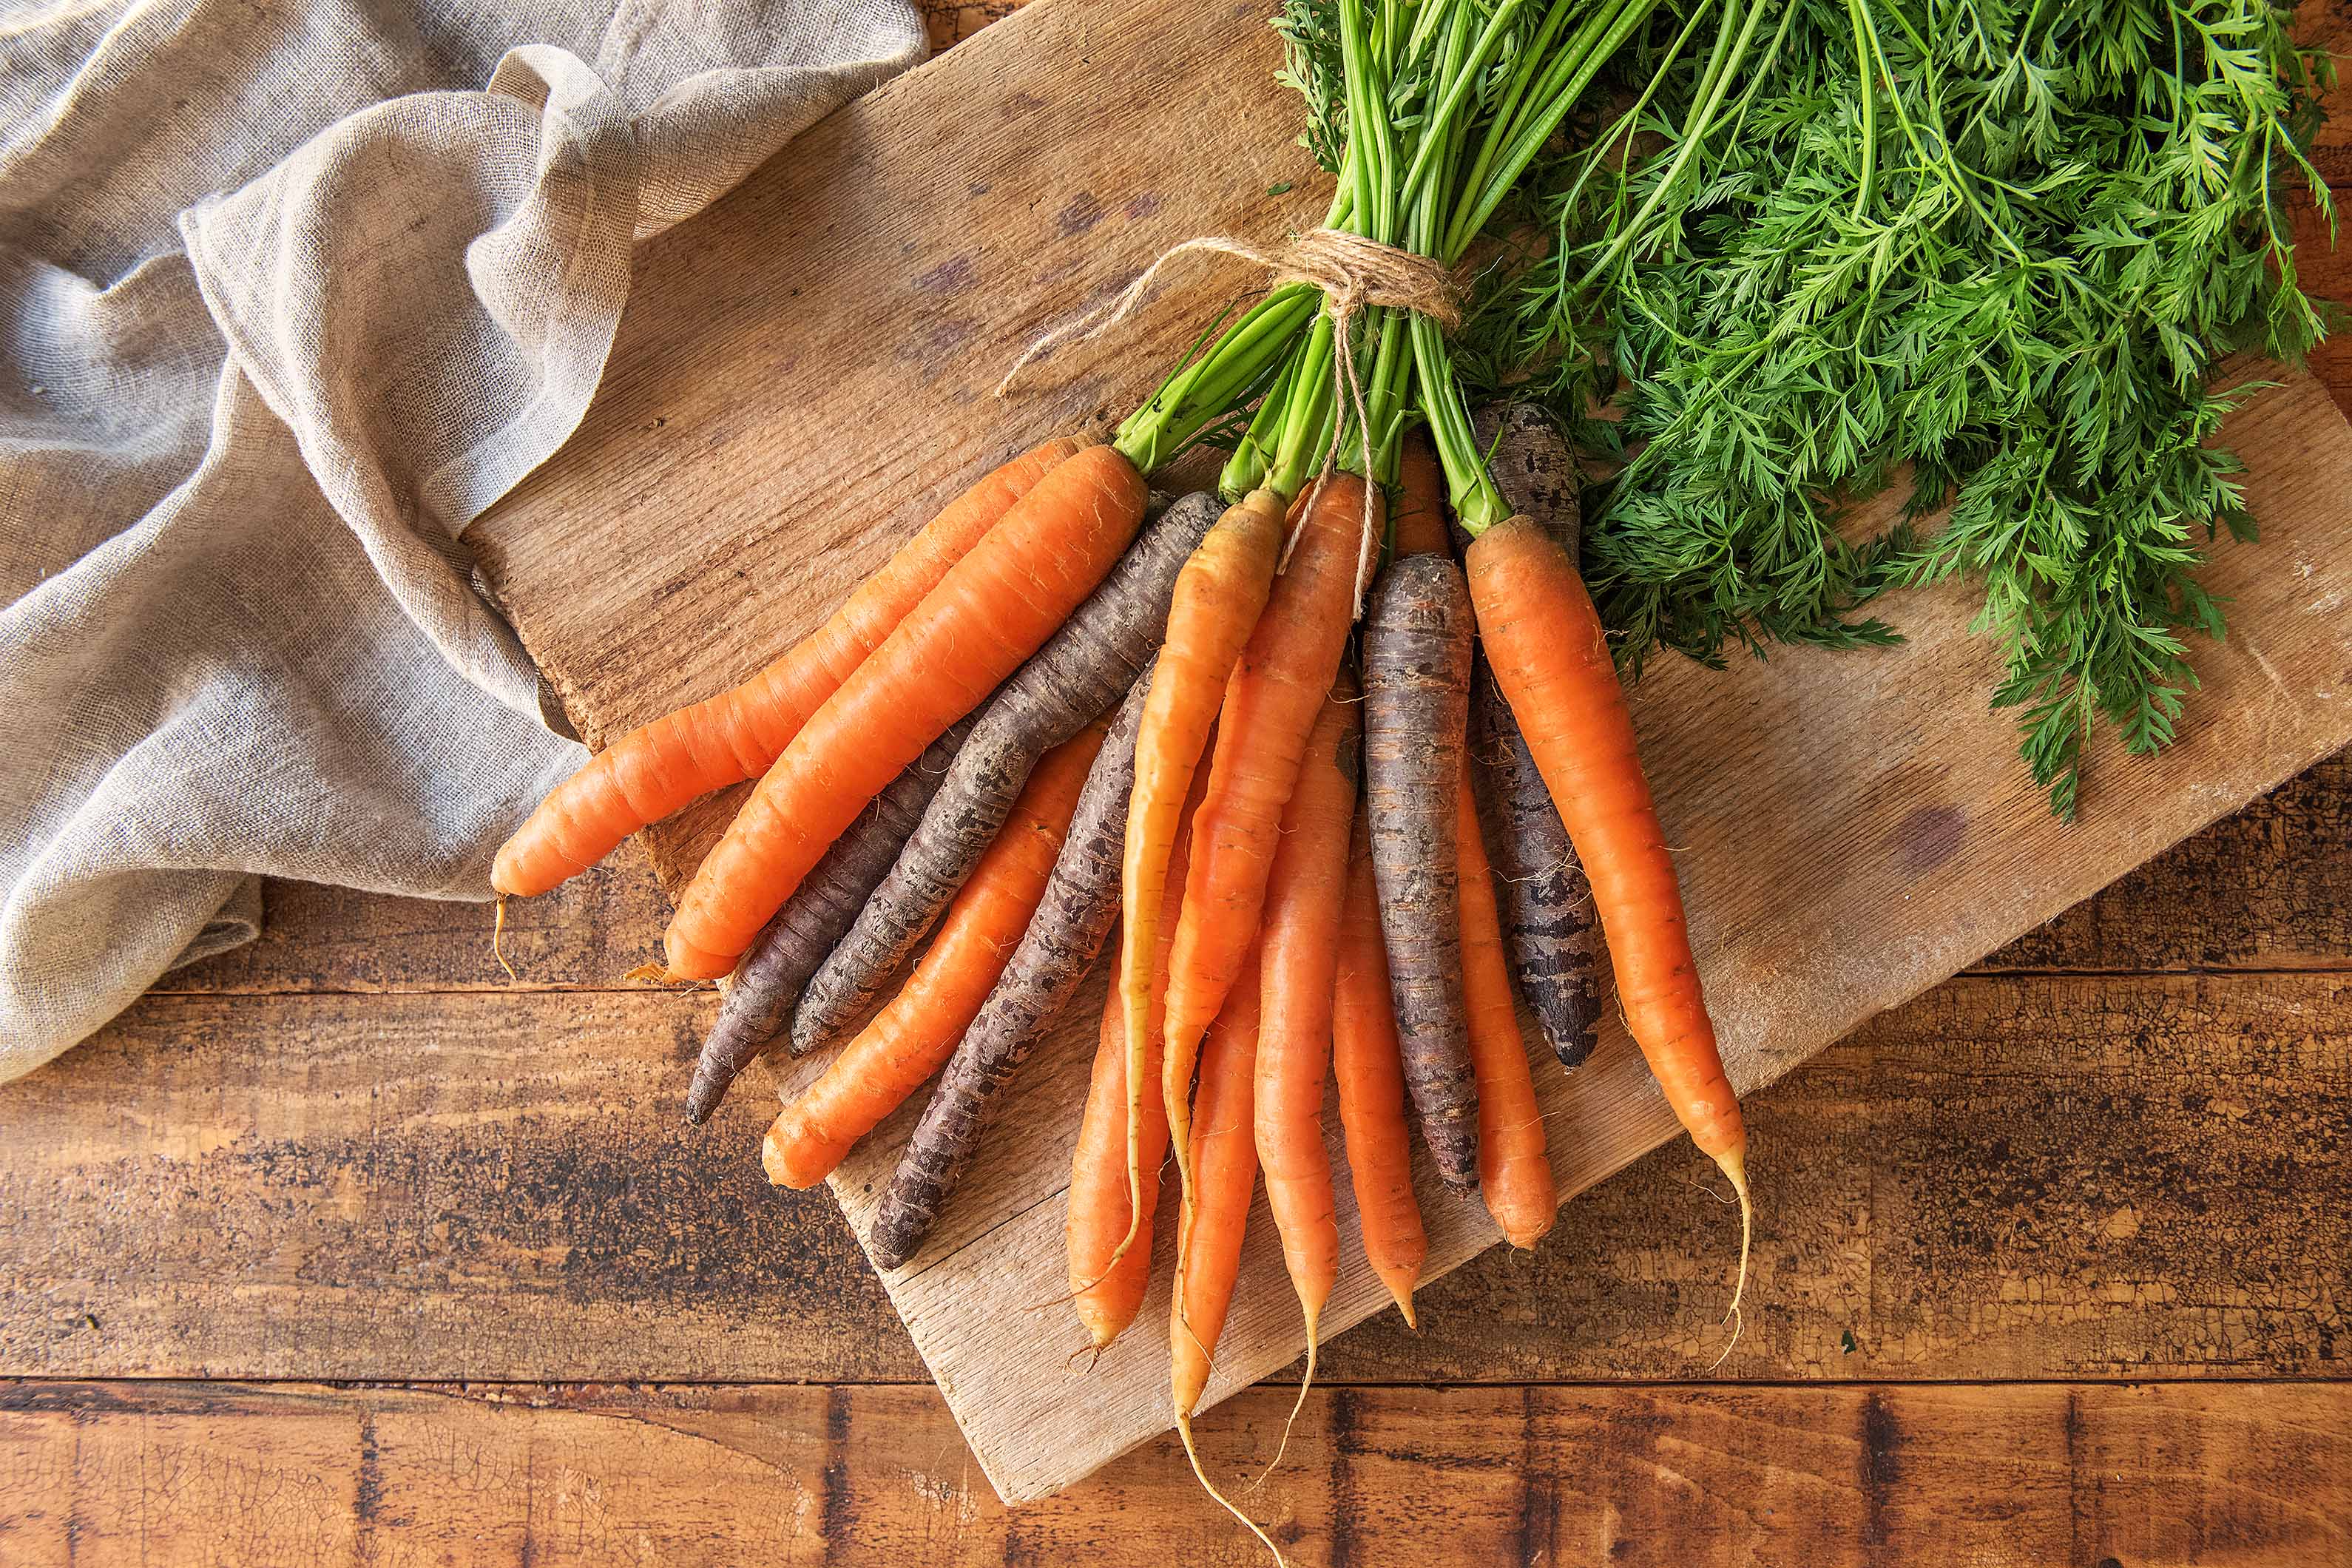 white root vegetable looks like a carrot